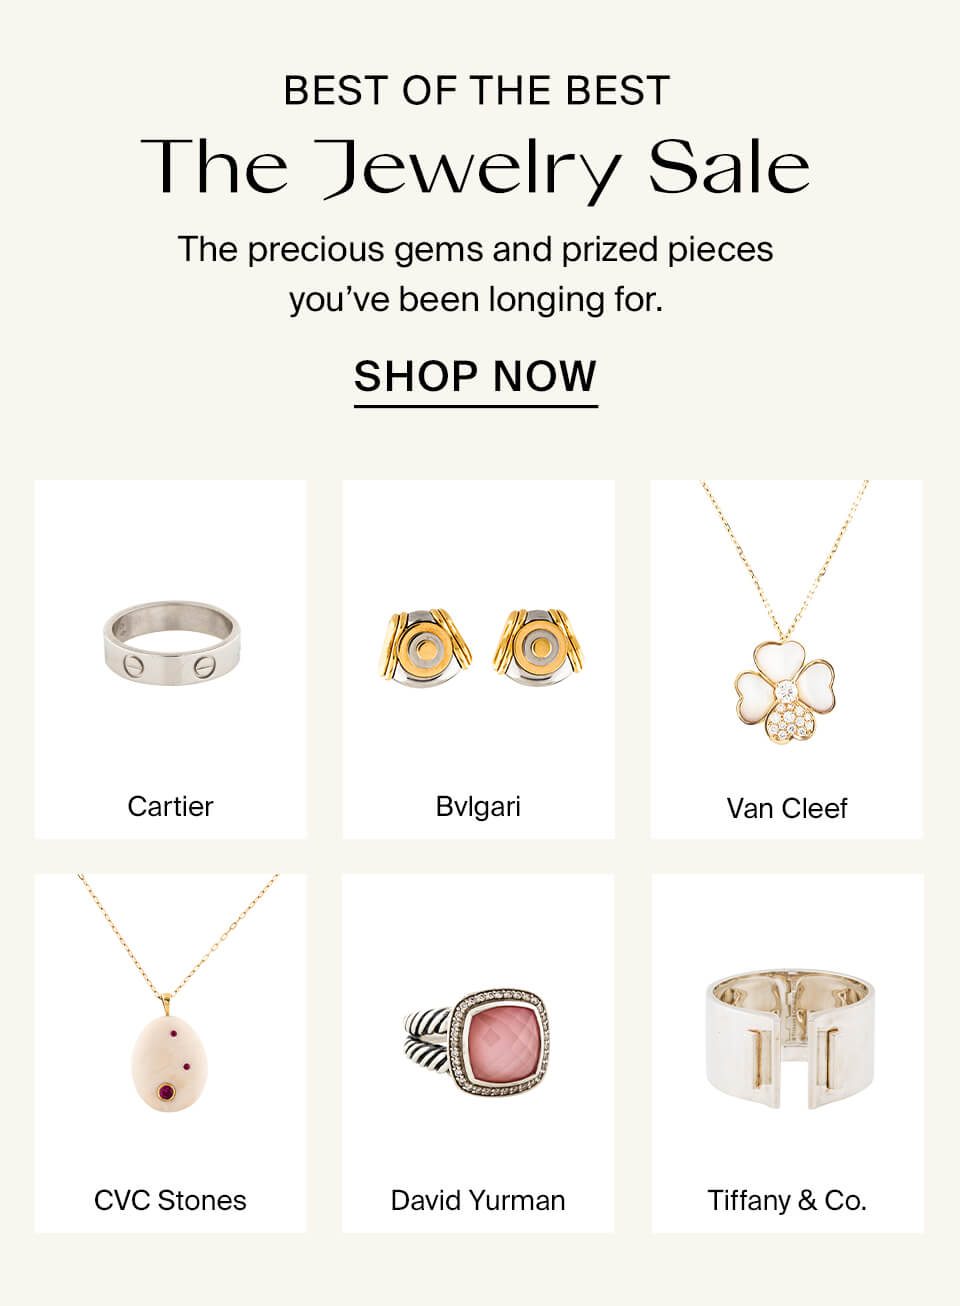 The Jewelry Sale